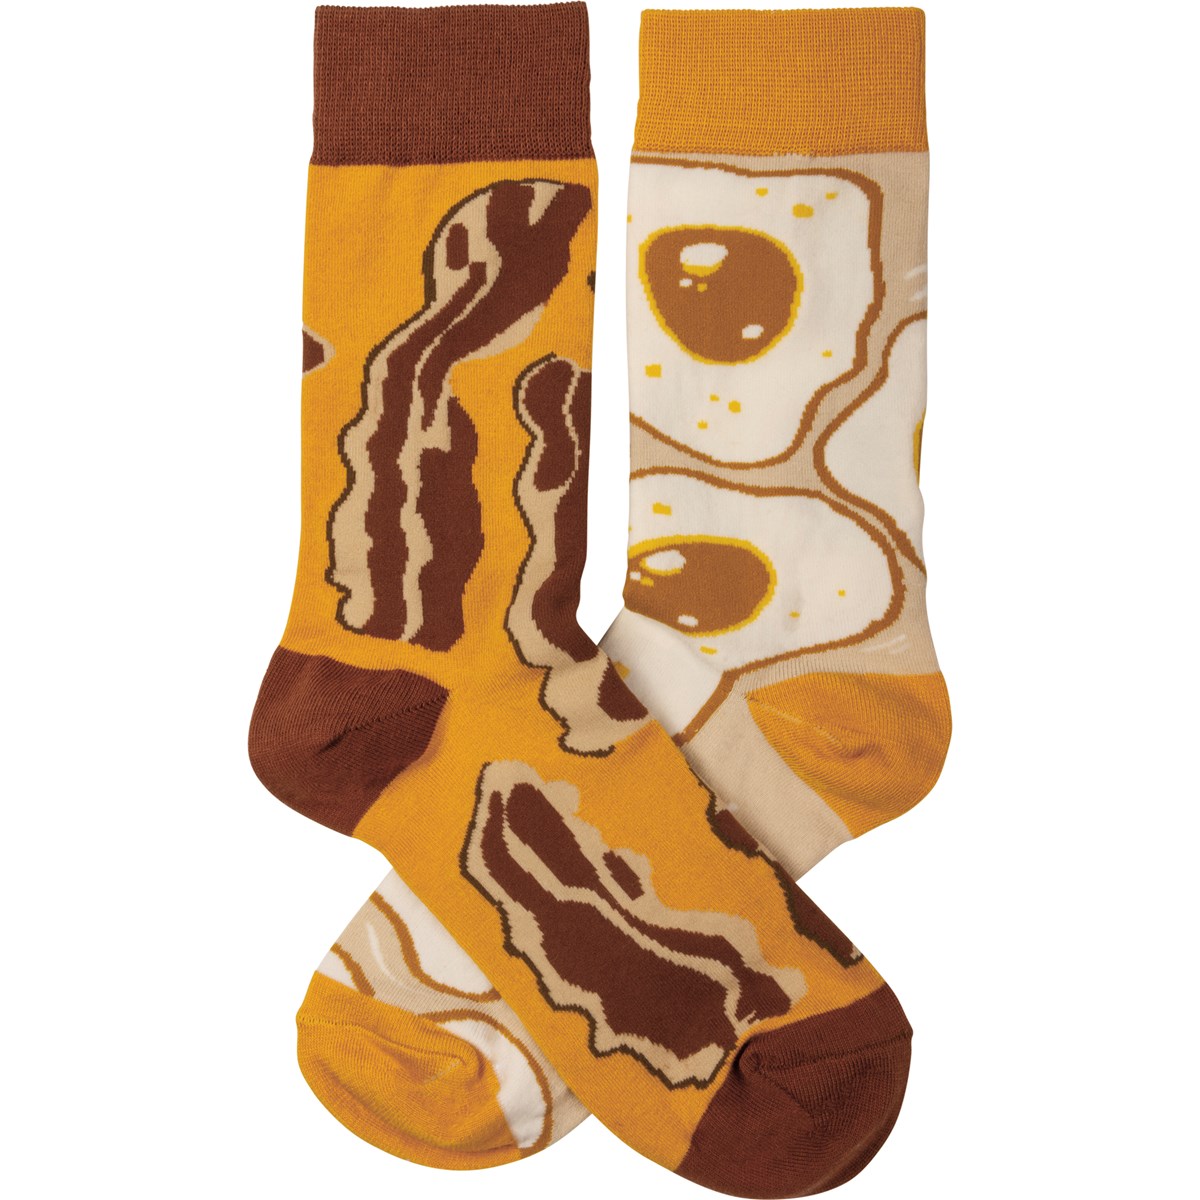 Bacon And Egg Socks - Cotton, Nylon, Spandex